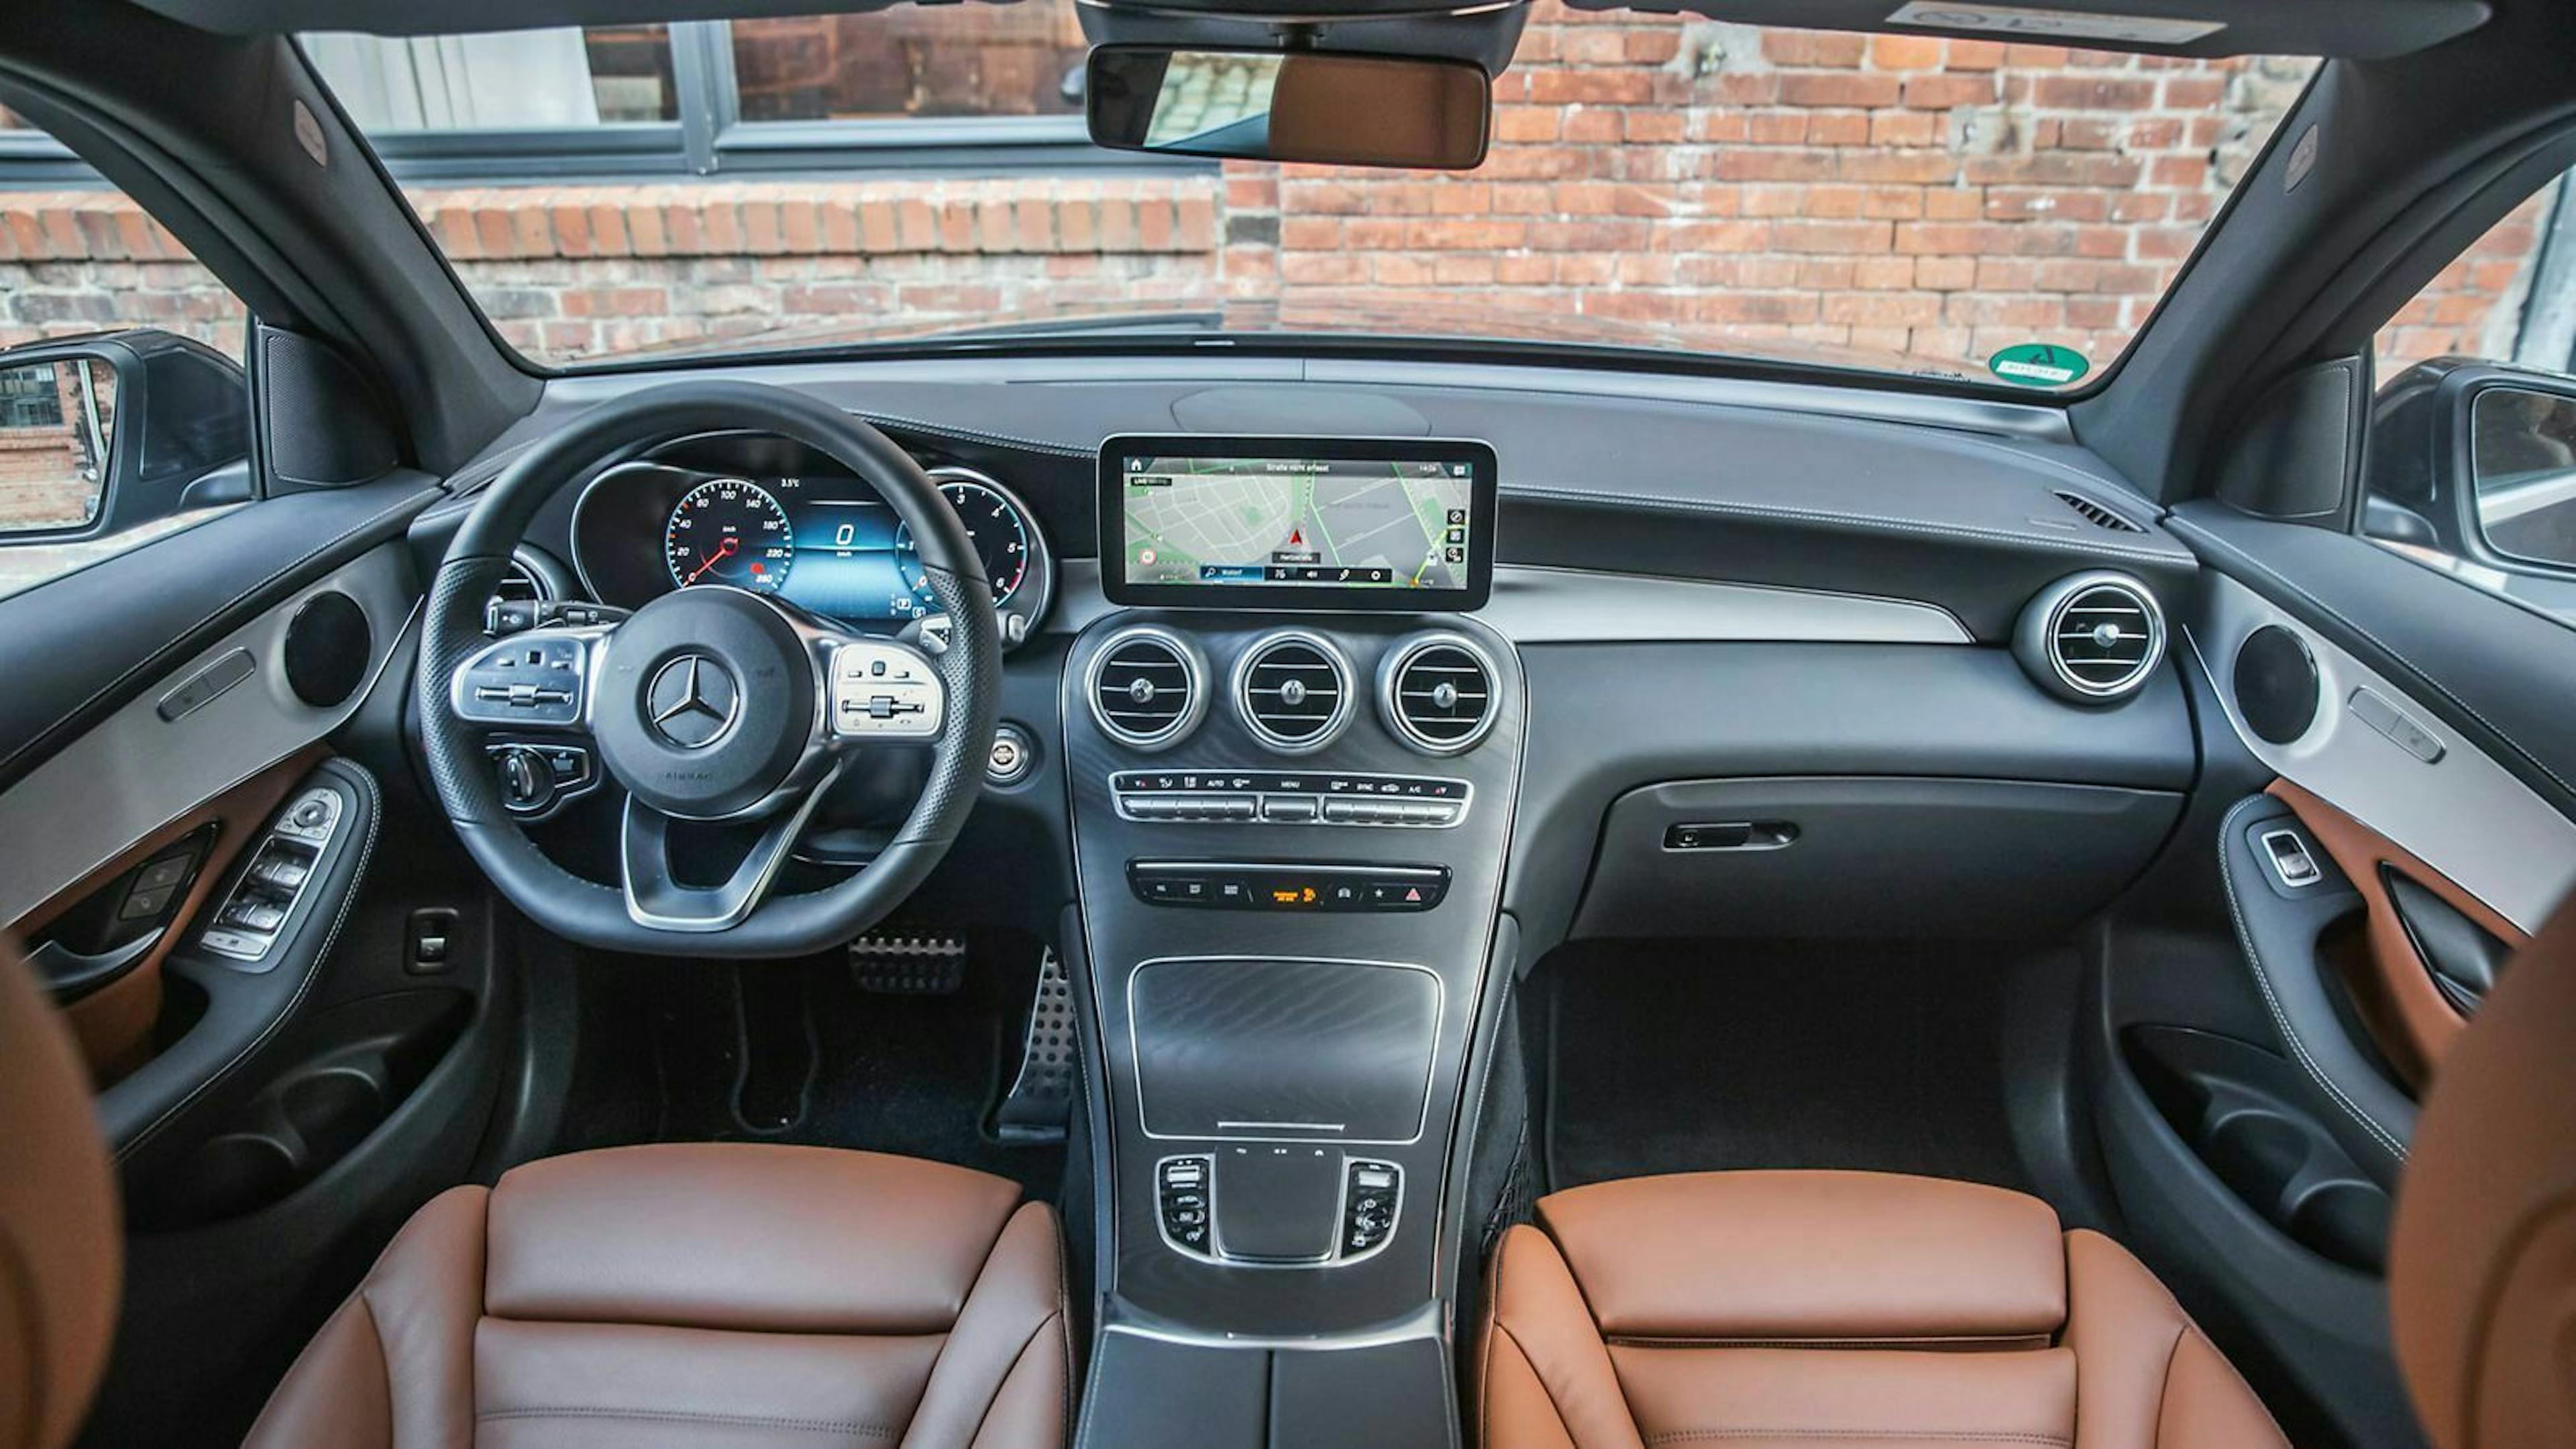 Cockpit-Ansicht des Mercedes GLC 220 d